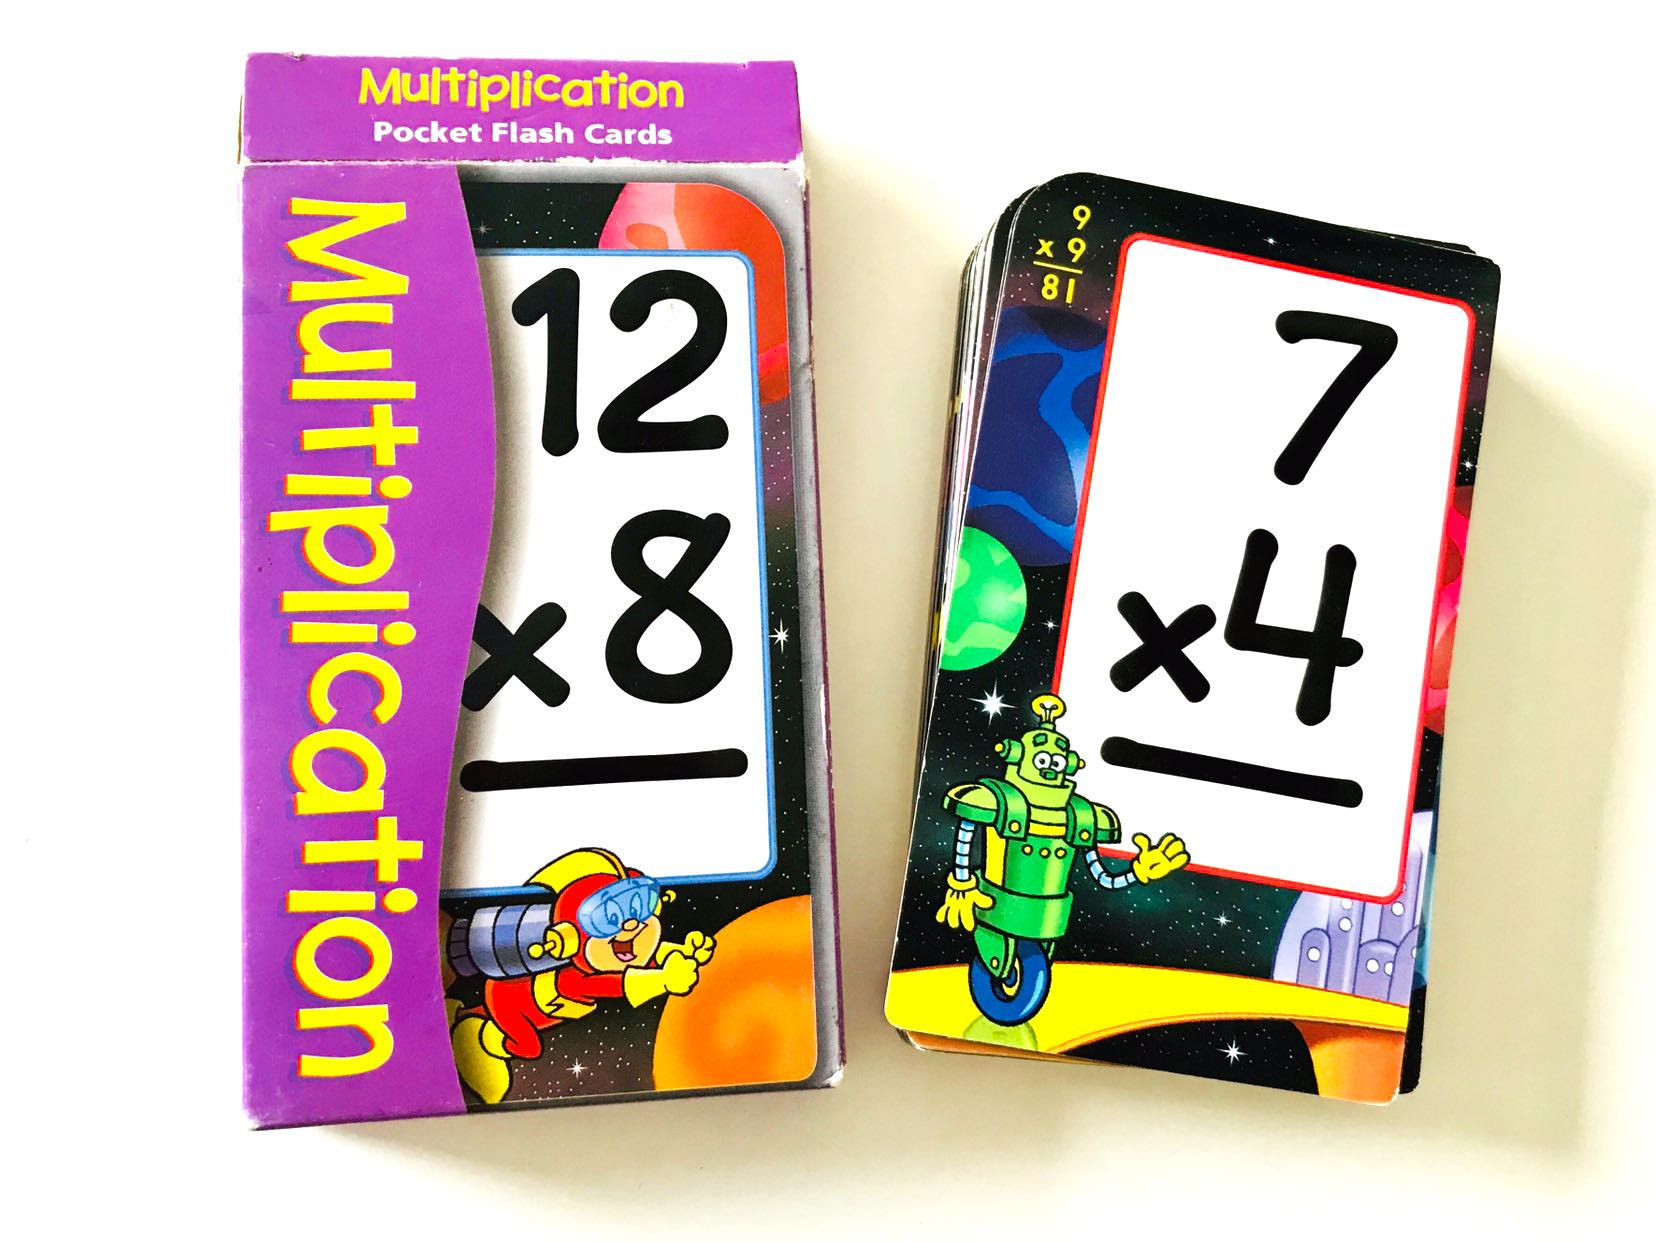 Multiplication Flash Cards $1 – PrintableMultiplication.com